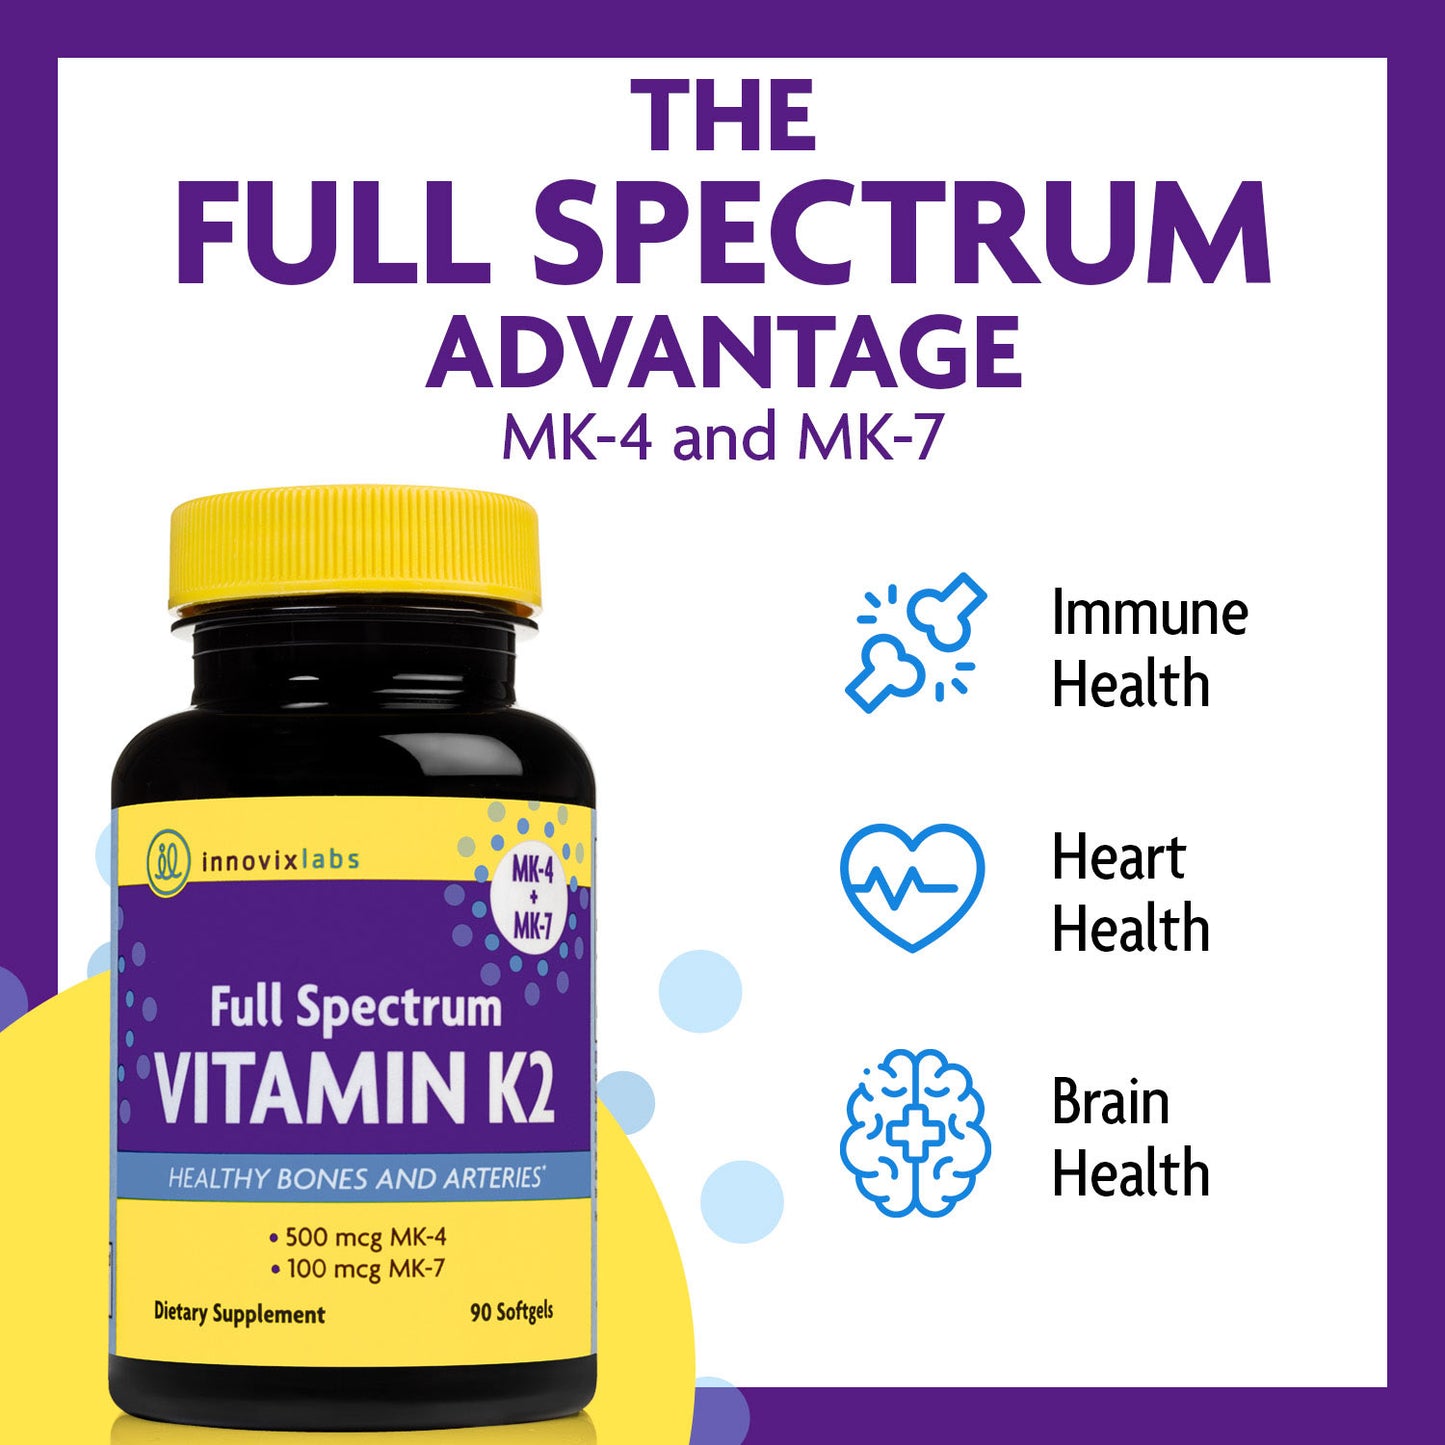 Full Spectrum Vitamin K2